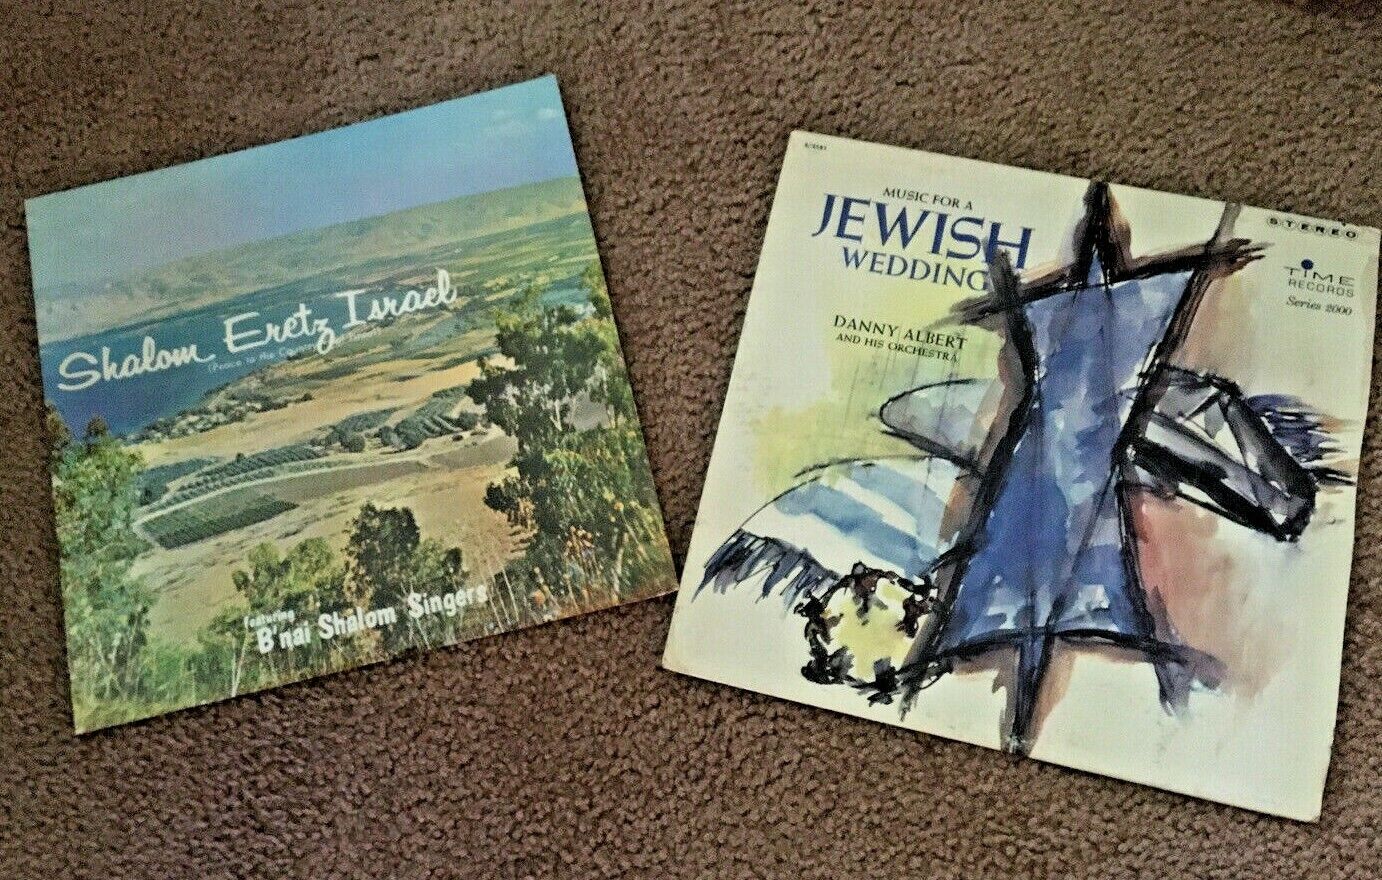 ORIGINAL 1960s 2 Albums Jewish Shalom Eretz Israel Peace & Jewish WEDDING Music